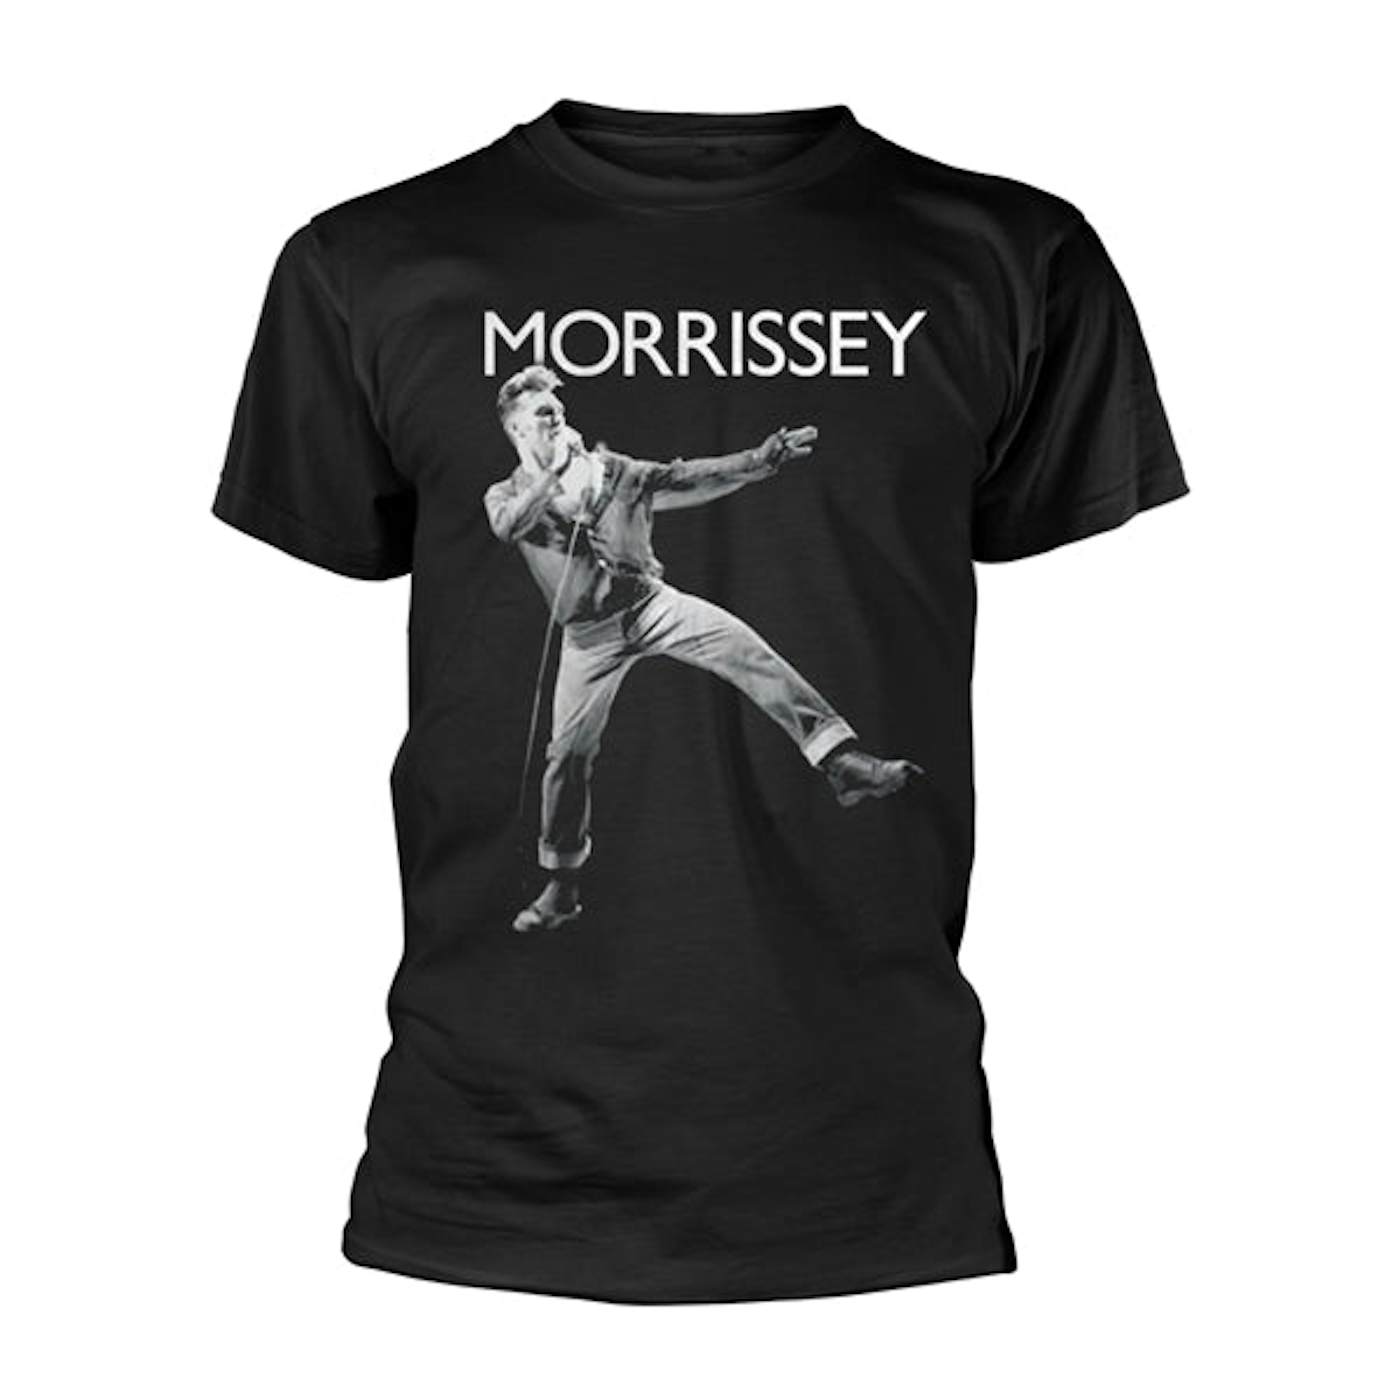 Morrissey T-Shirt - Kick